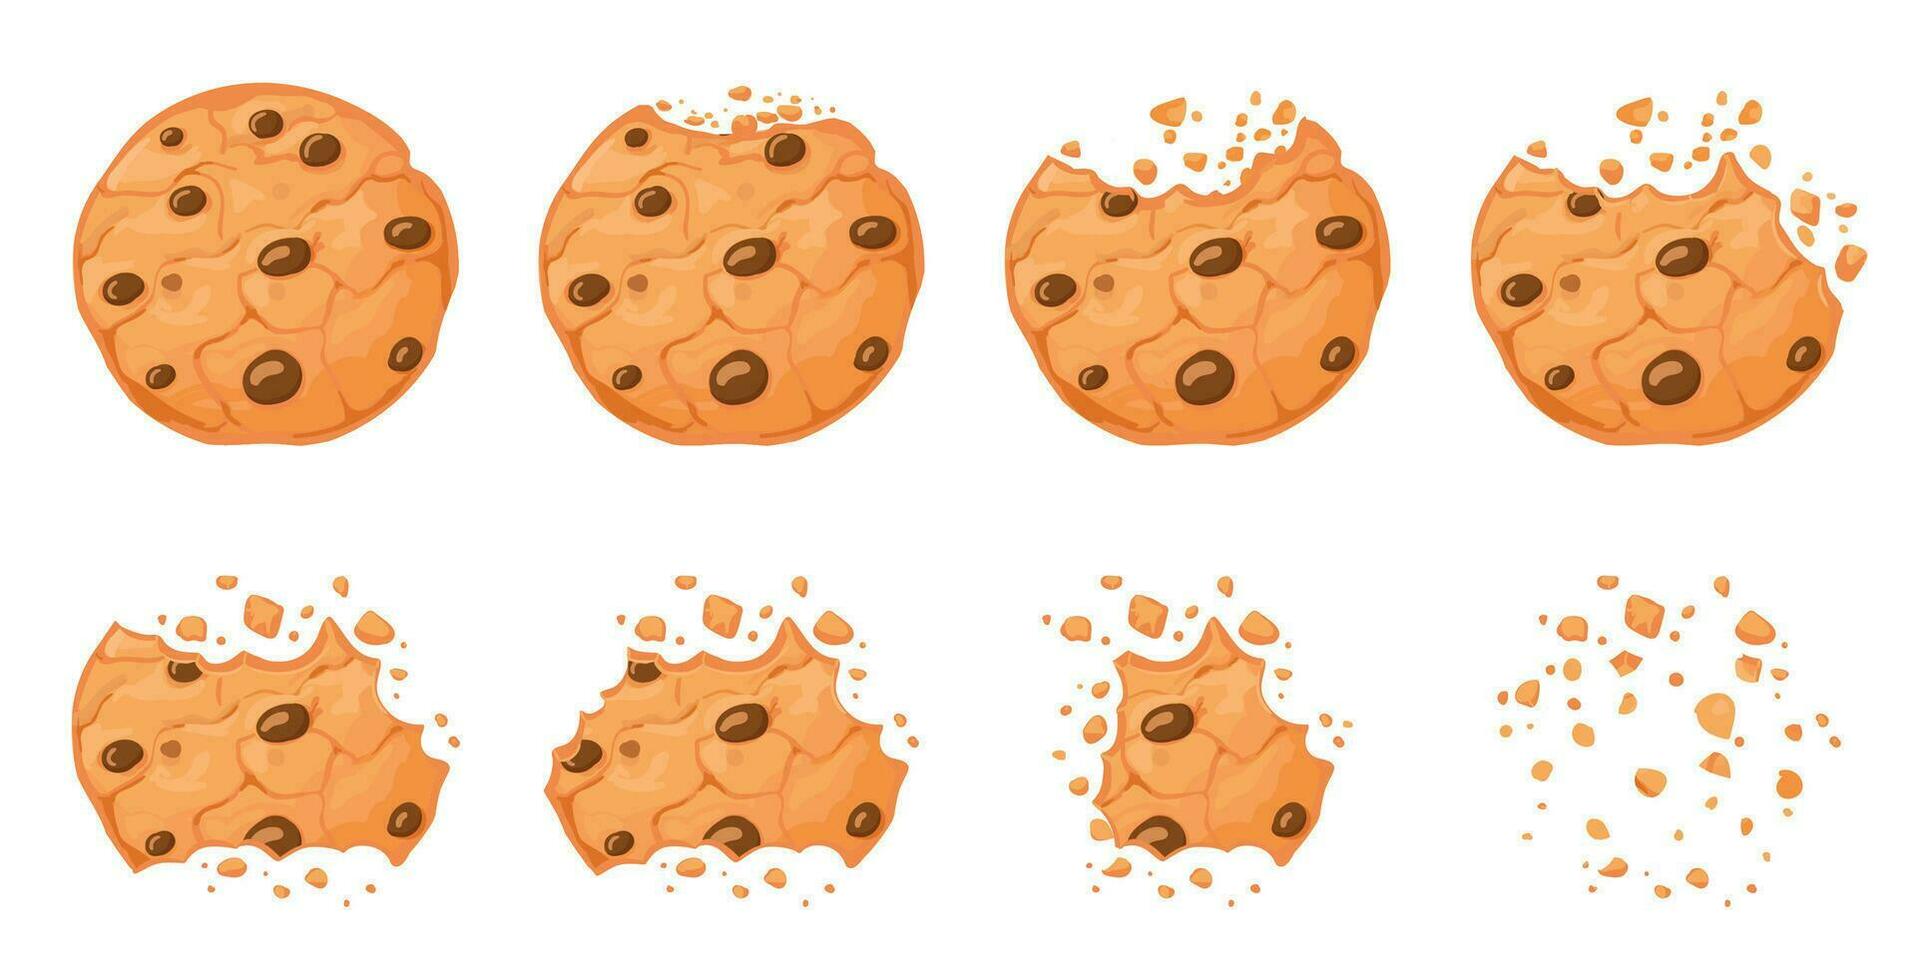 Bitten chocolate chip cookie. Crunch homemade brown biscuits broken with crumbs. Cartoon baked round choco cookies bite animation vector set